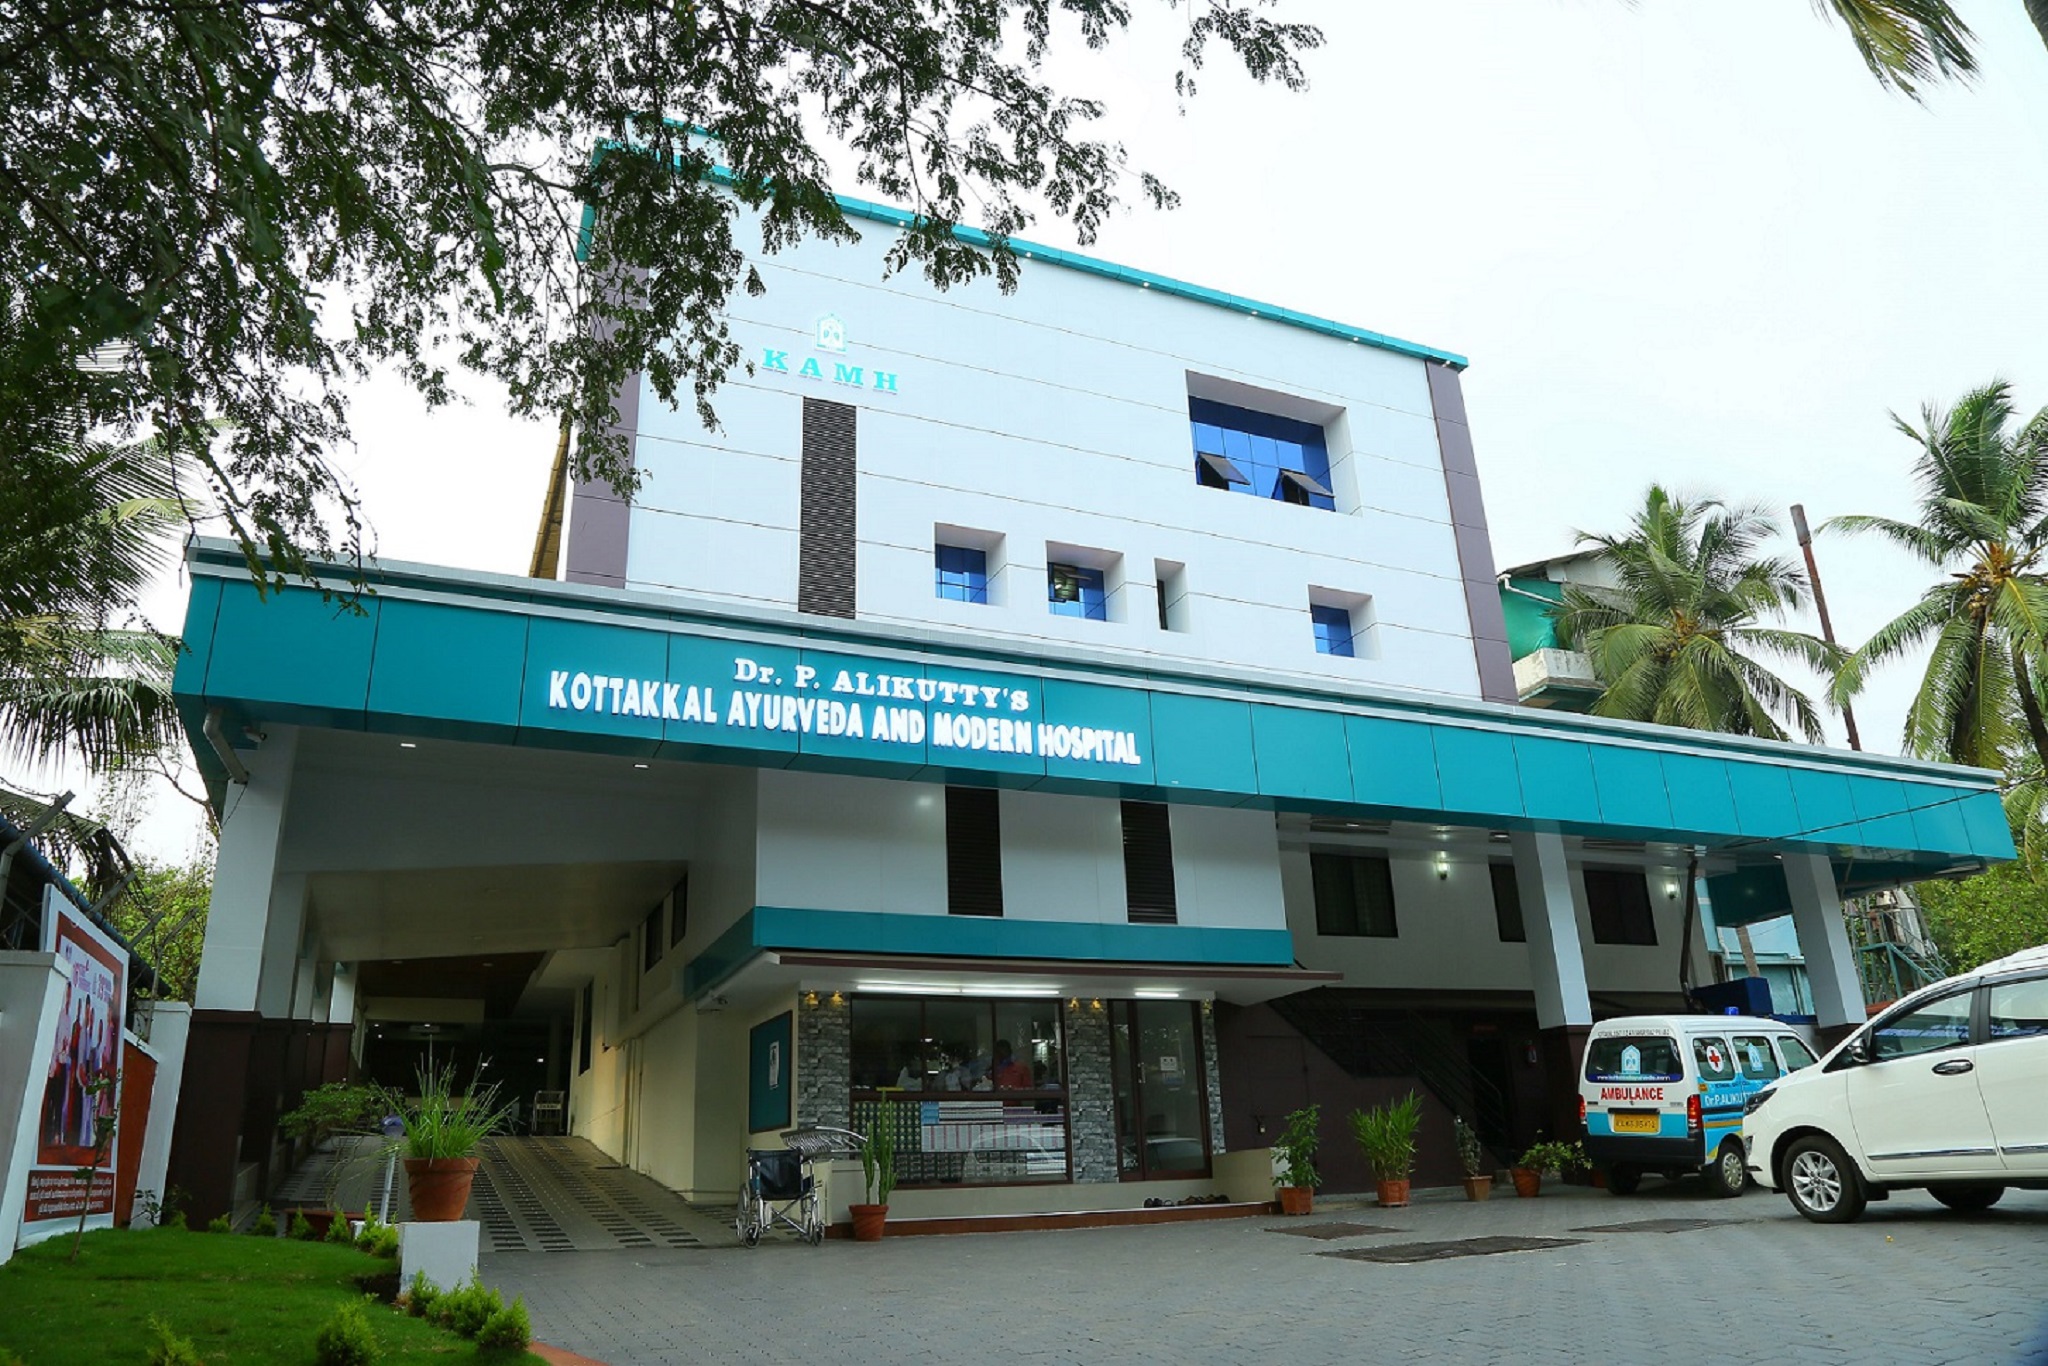 Dr P Alikuttys Kottakkal Ayurveda & Modern Hospital